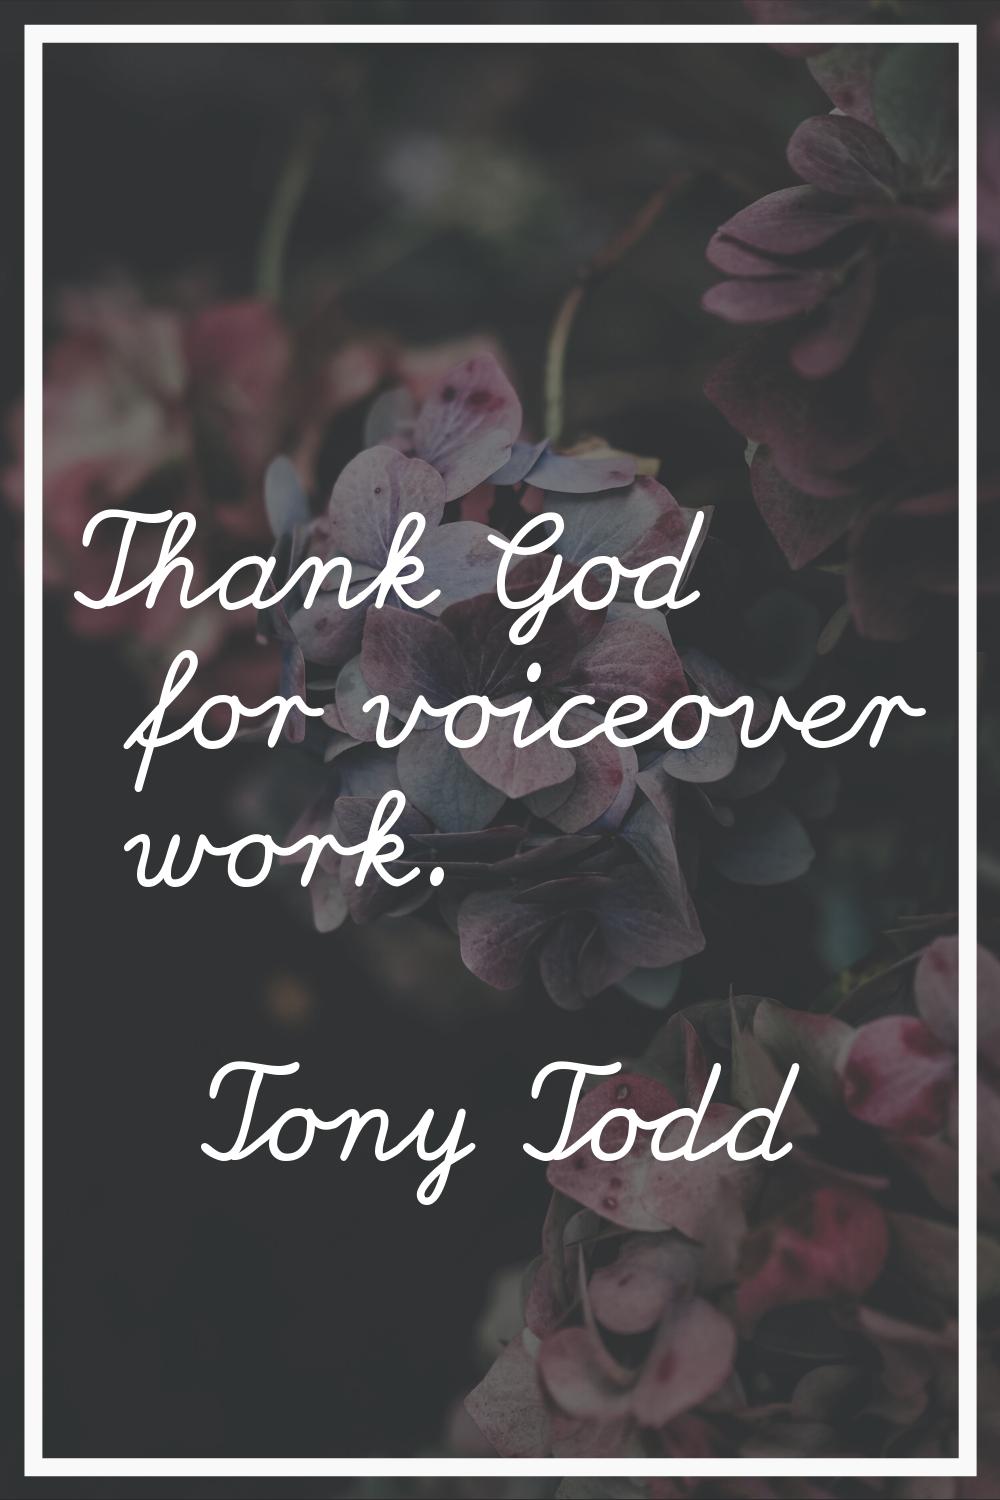 Thank God for voiceover work.